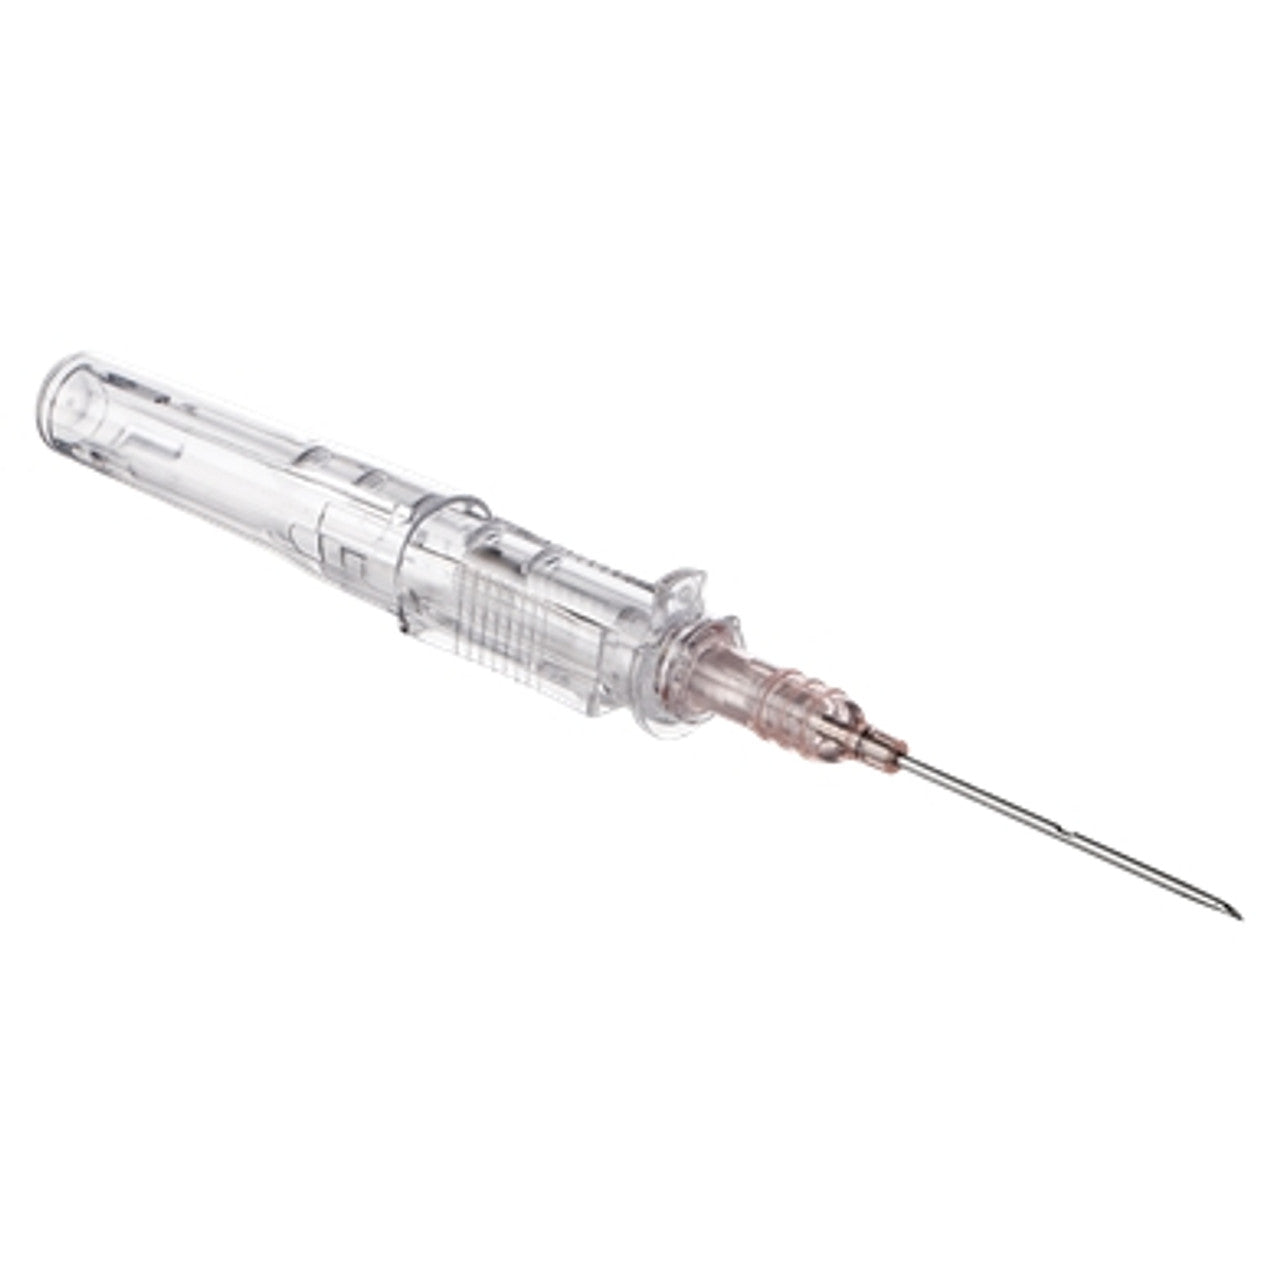 SMITHS MEDICAL 326710 ViaValve IV Safety Catheter, 20G x 1", 200/cs RX ONLY